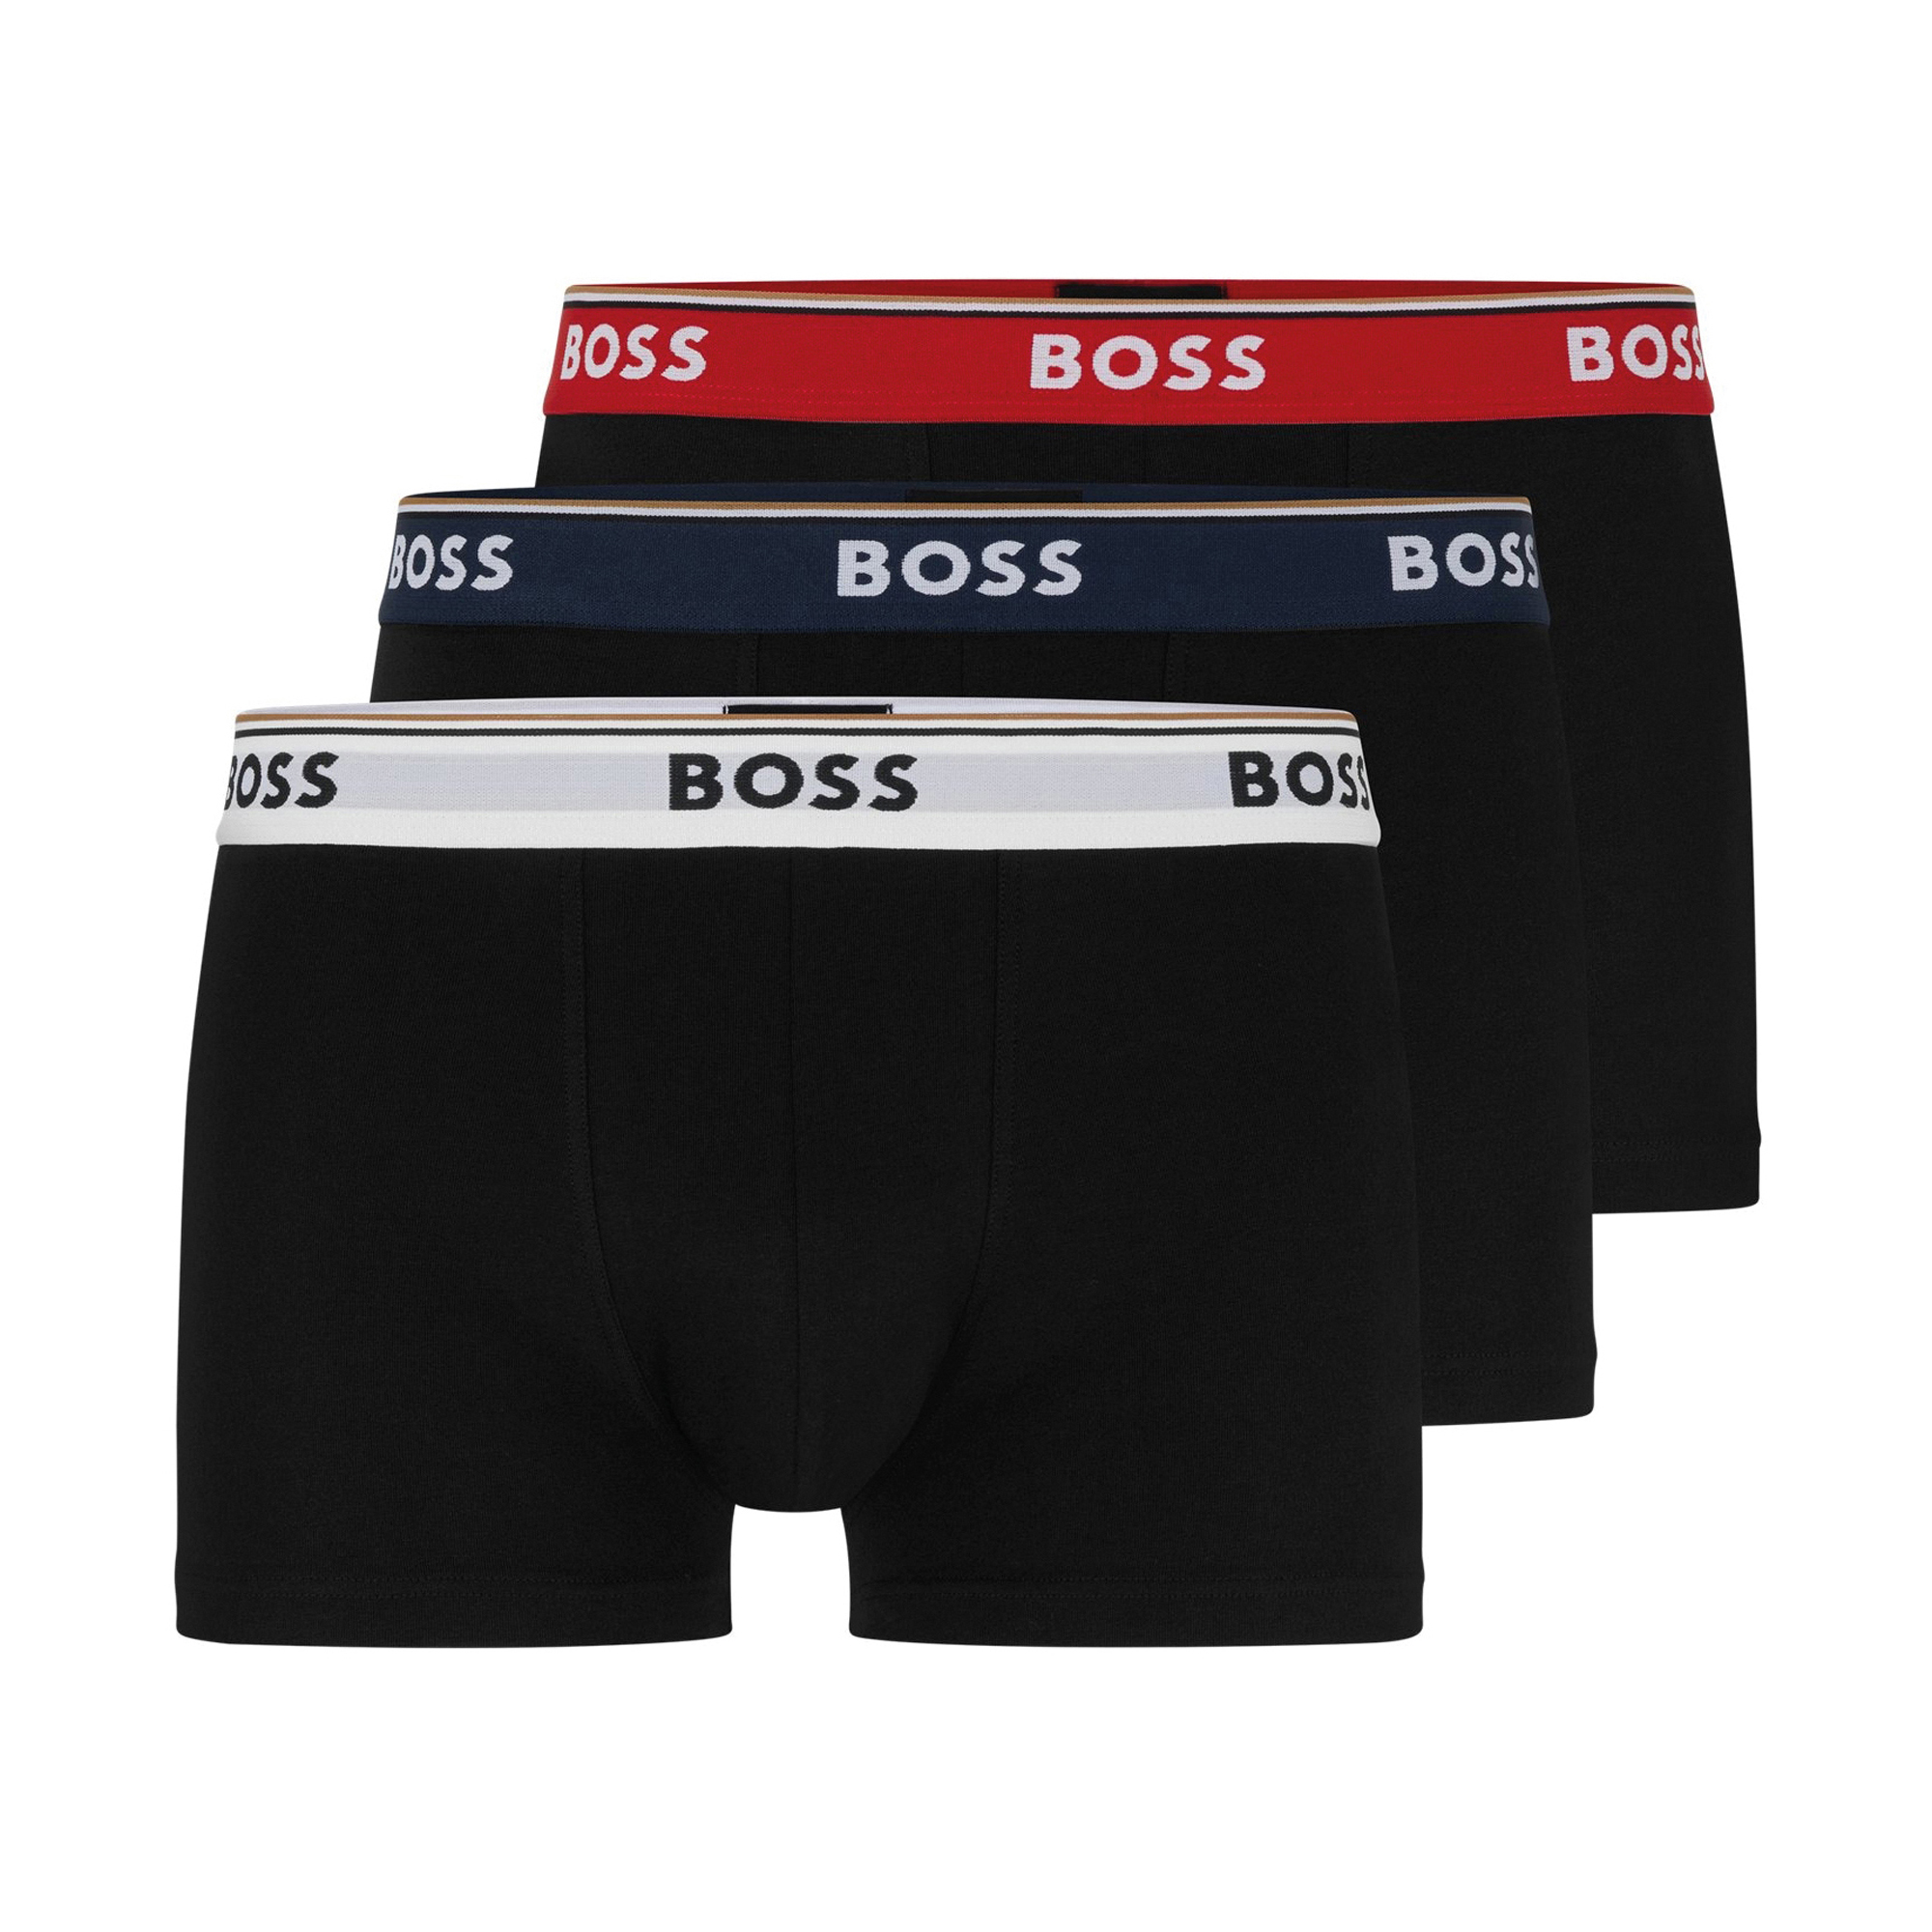 Hugo Boss Boxershorts met logoband in 3 pack online kopen